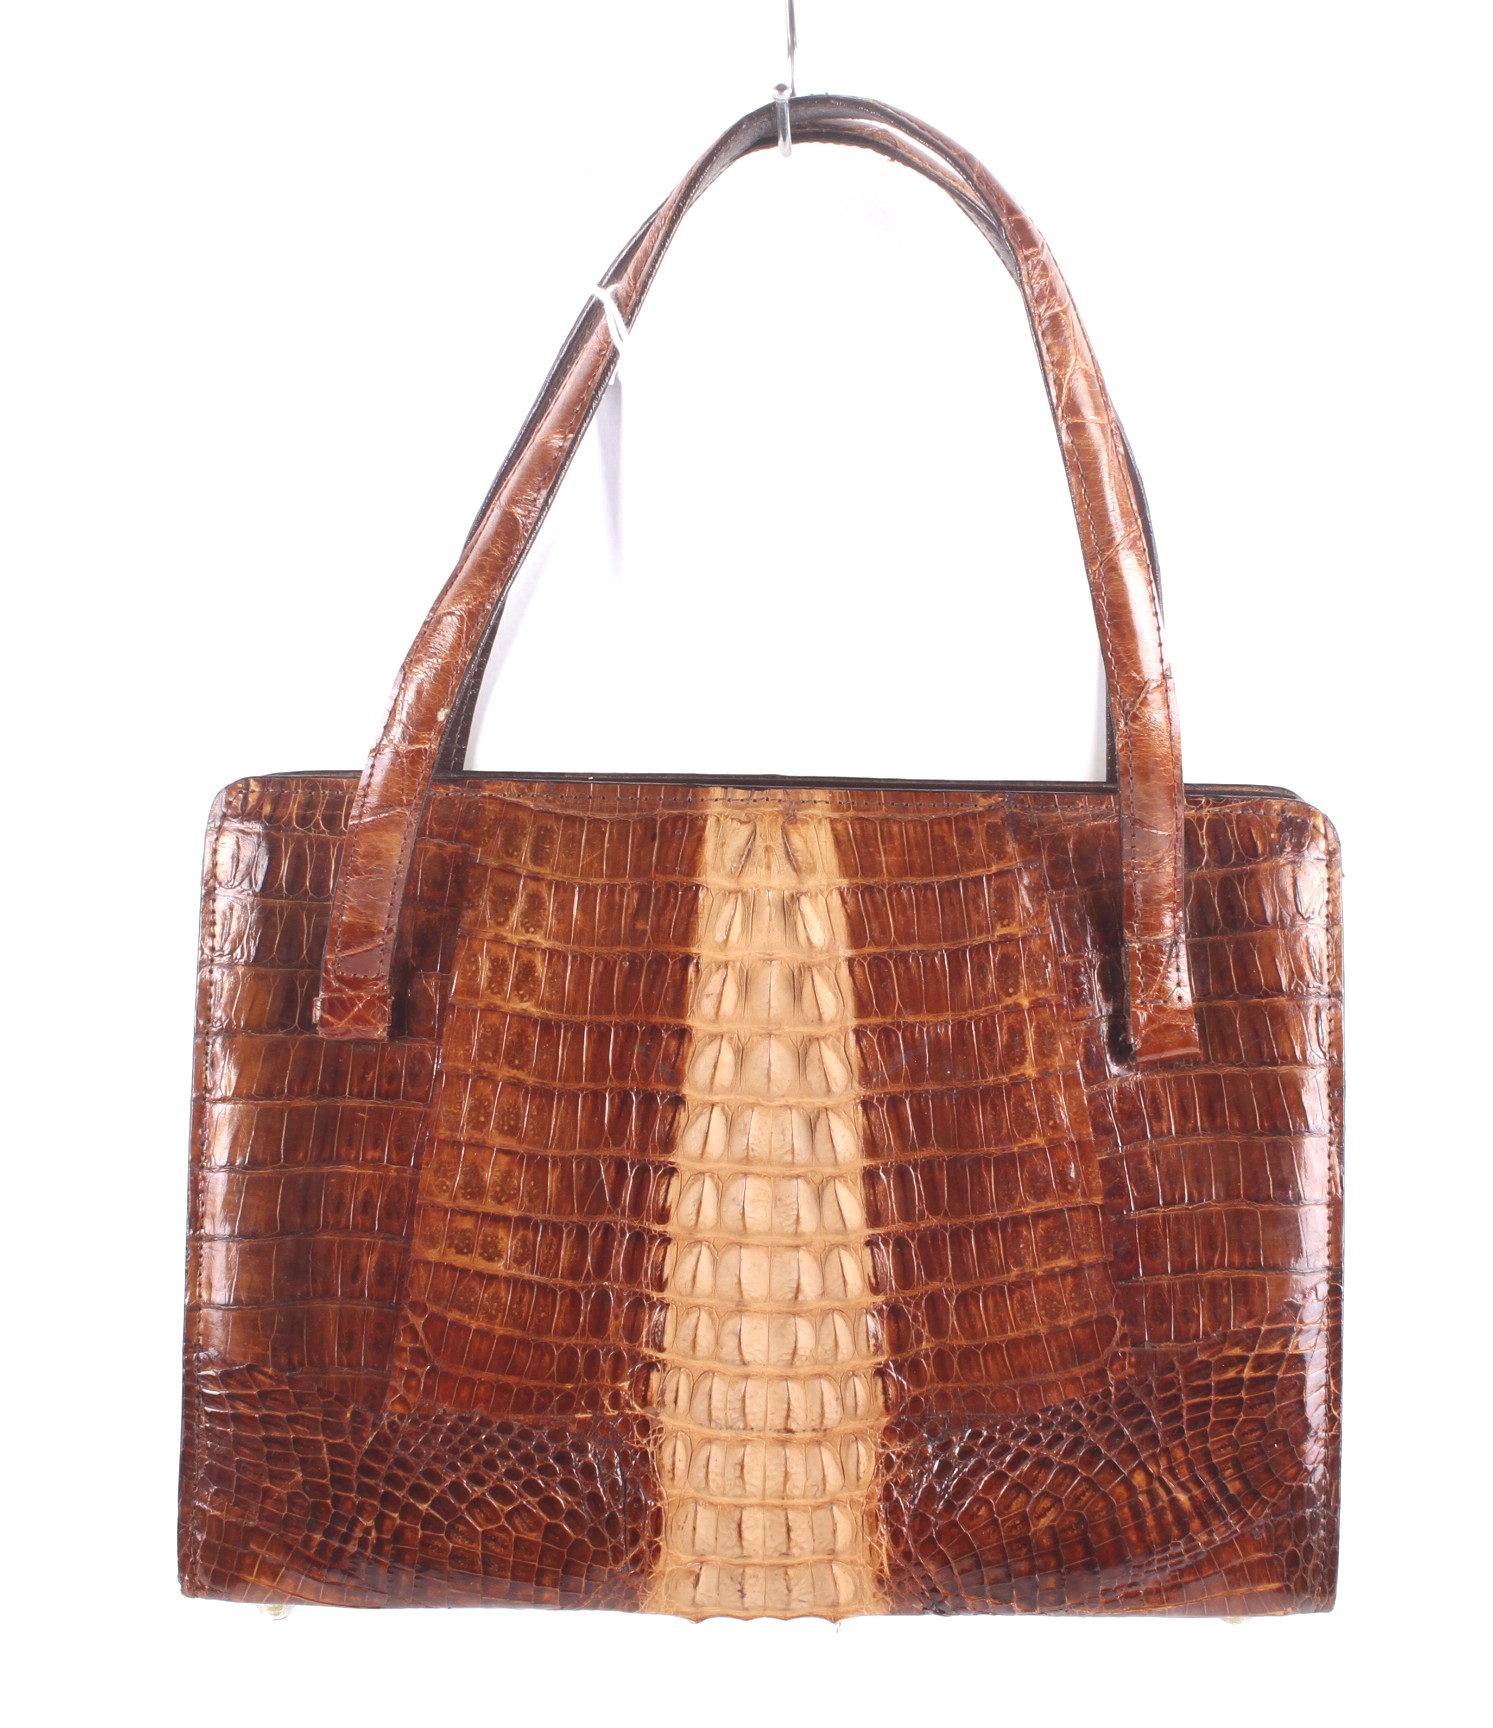 A vintage brown crocodile skin handbag and purse. - Image 2 of 3